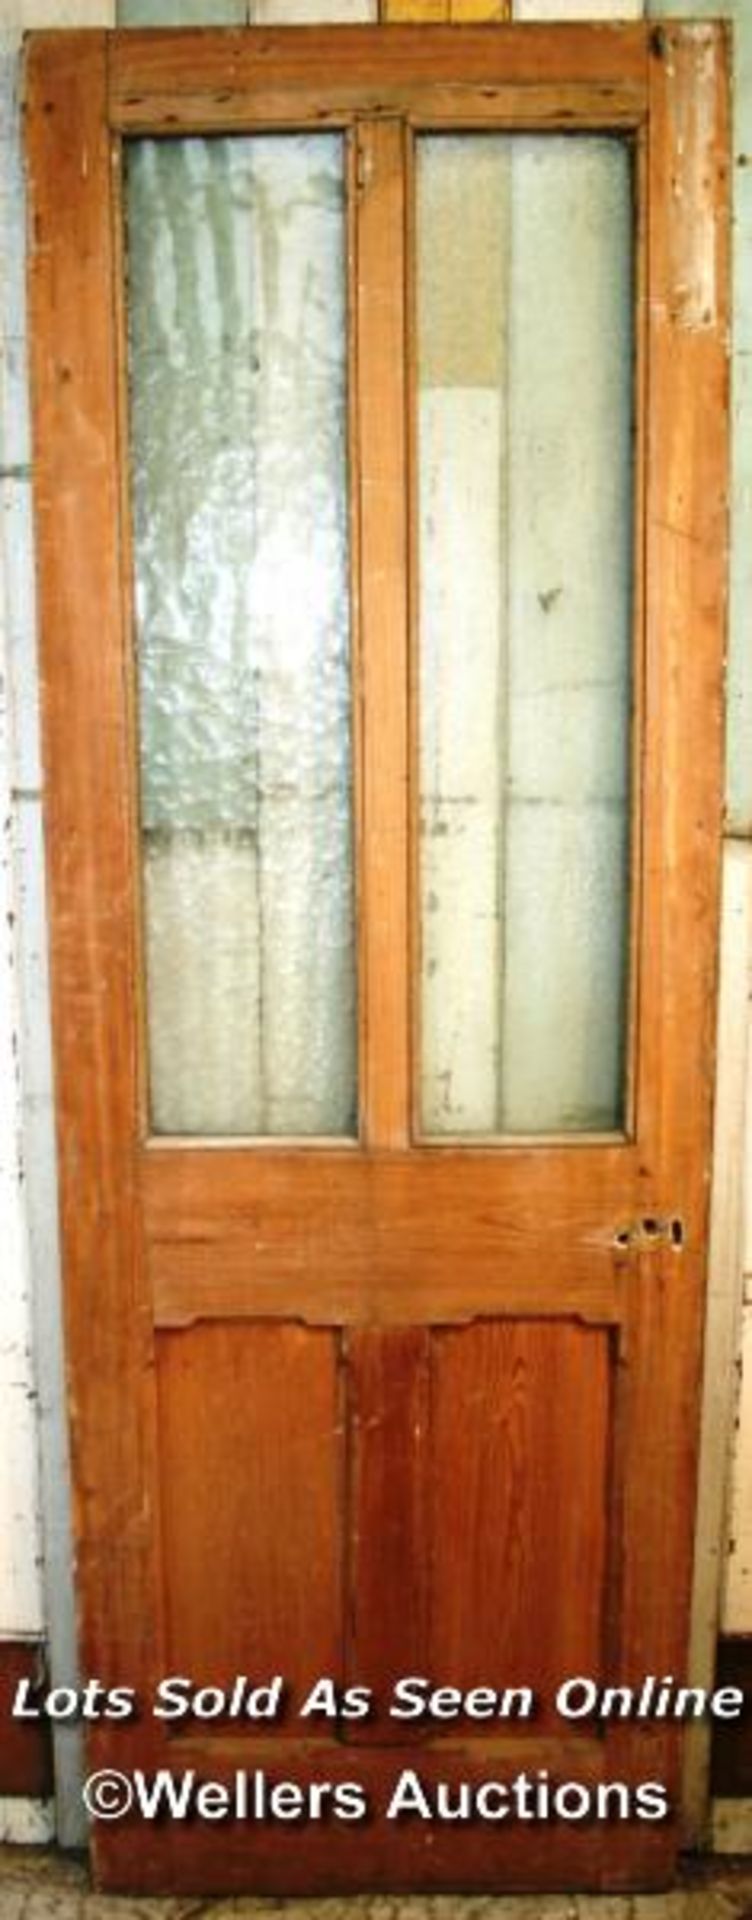 2 Victorian four panel glazed doors for restoration. Sizes 73cm x 216cm x 4.5cm and 84cm x 217cm x - Image 4 of 6